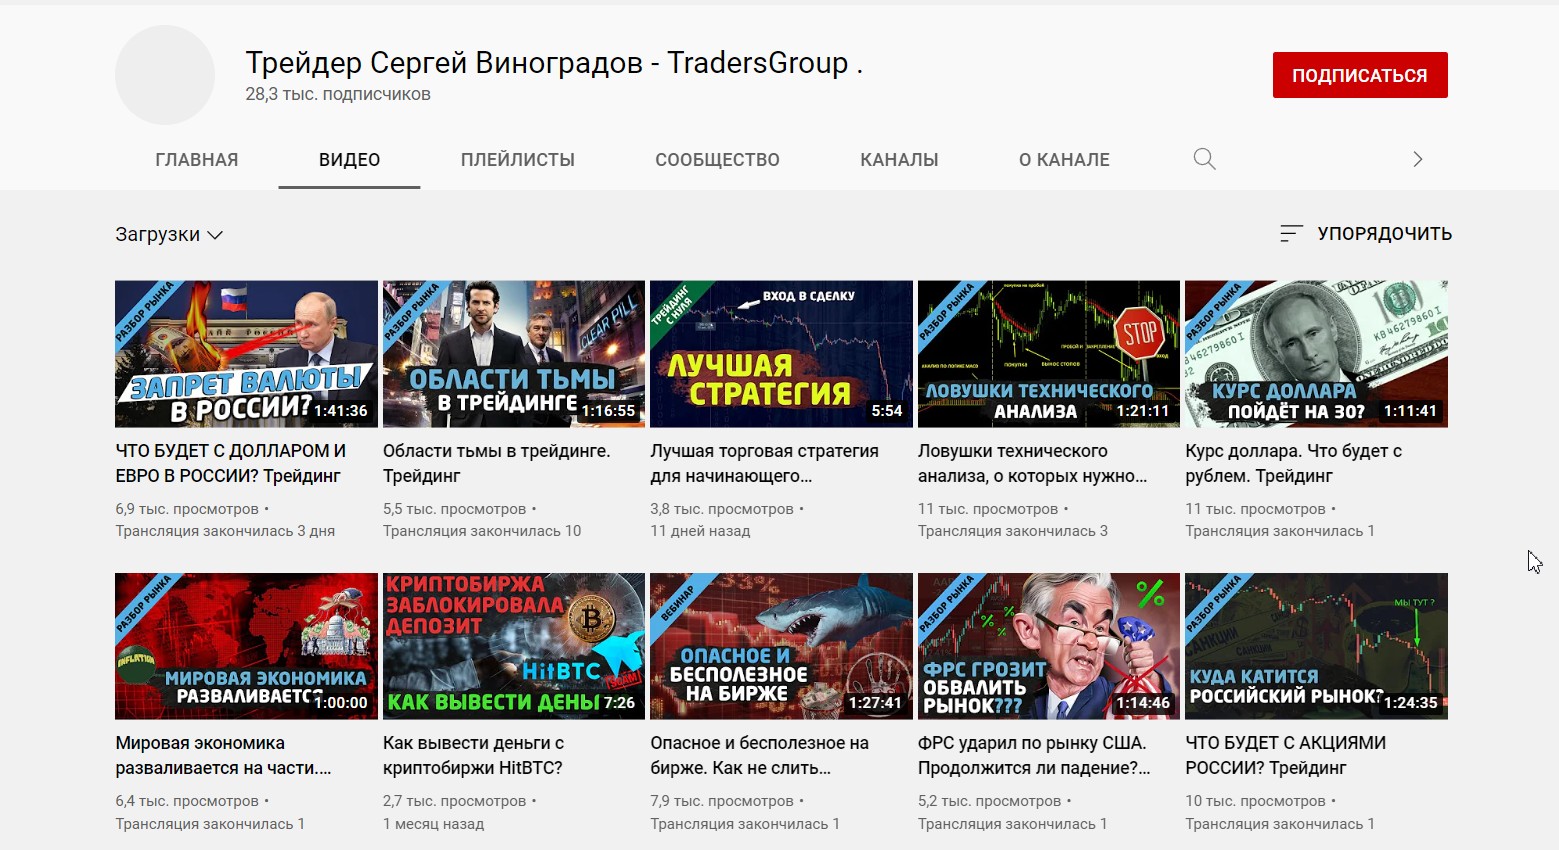 Канал YouTube Трейдер Сергей Виноградов – TradersGroup